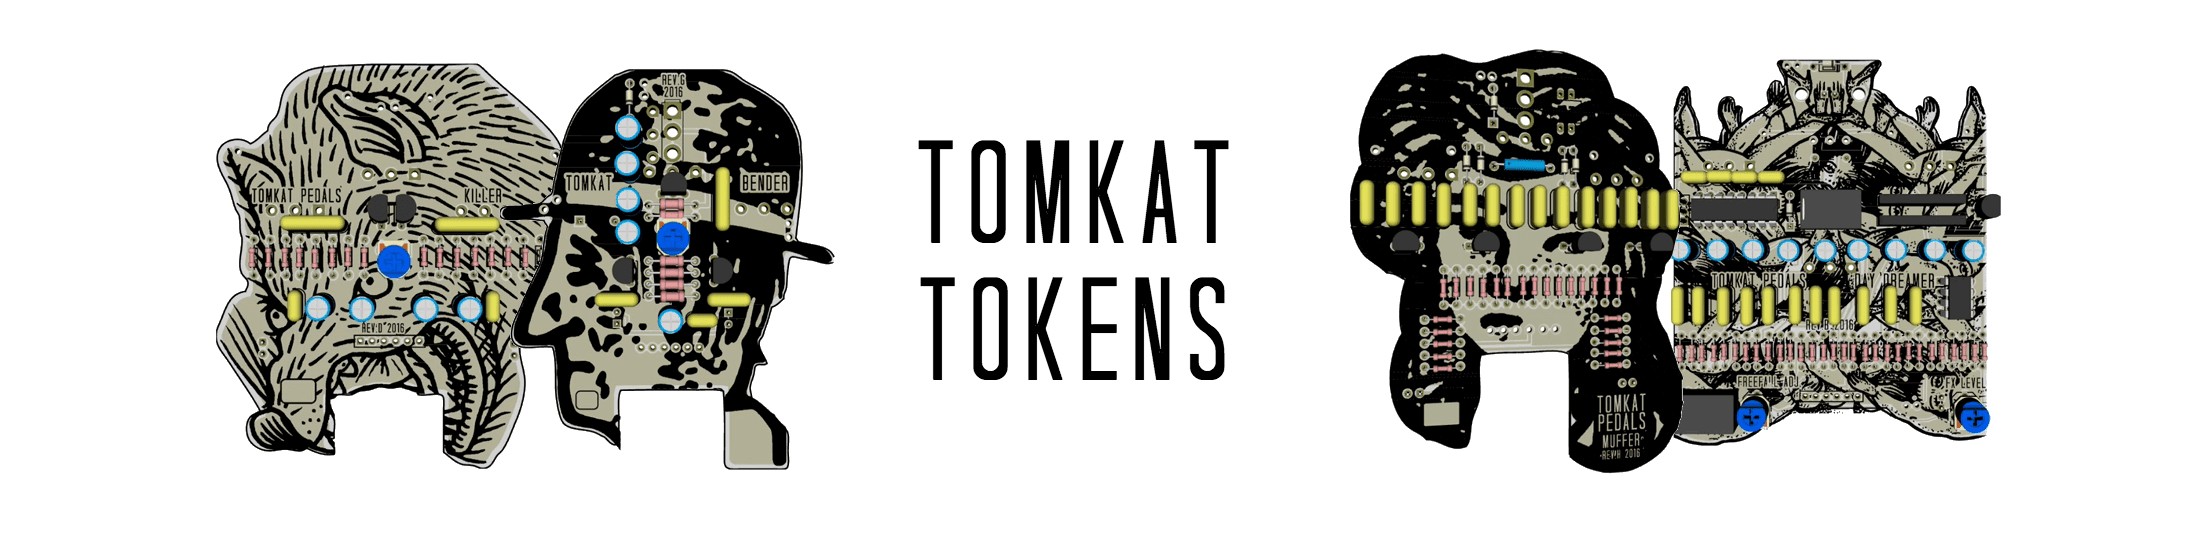 TOMKAT  TOKENS